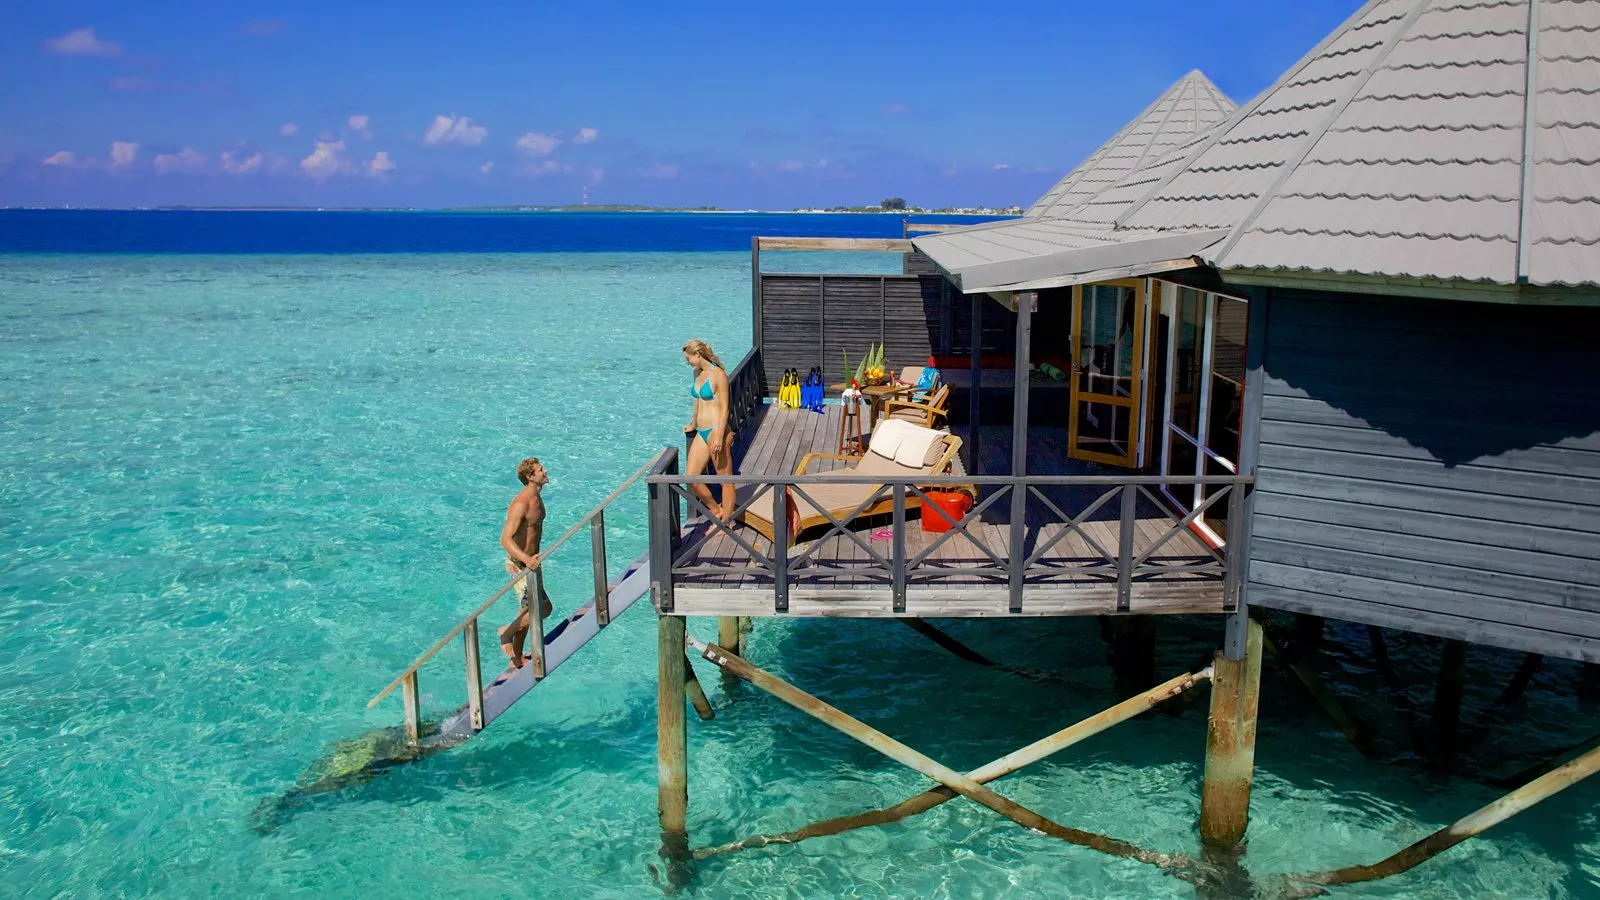 Komandoo Maldives Island Resort in Maldives, Central Asia | Sex Hotels - Rated 4